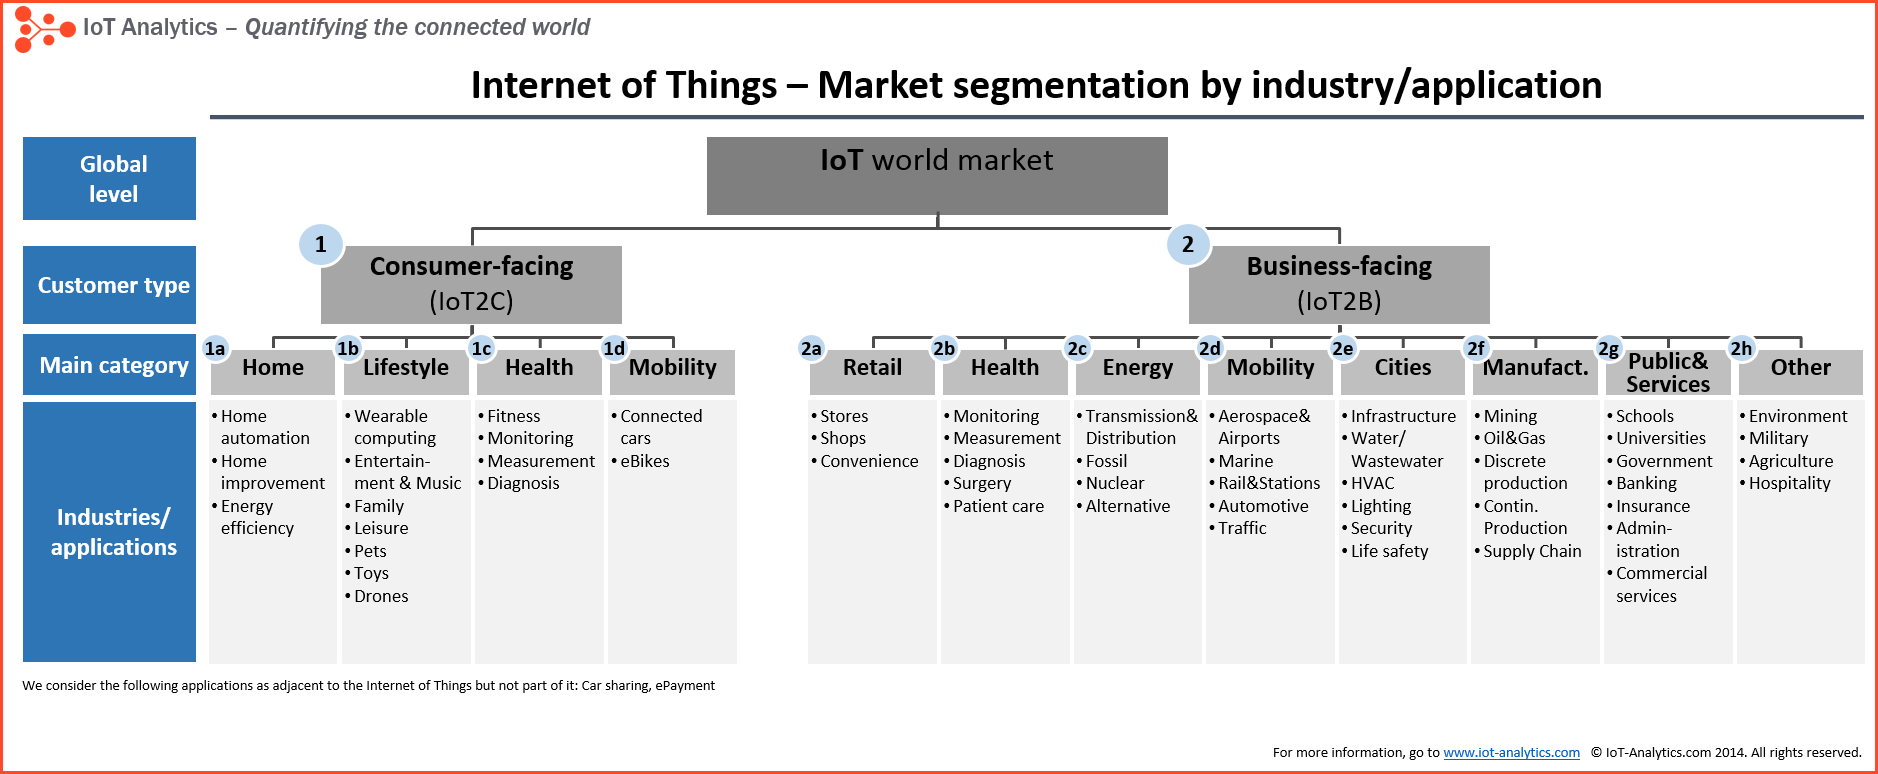 IoT market segments